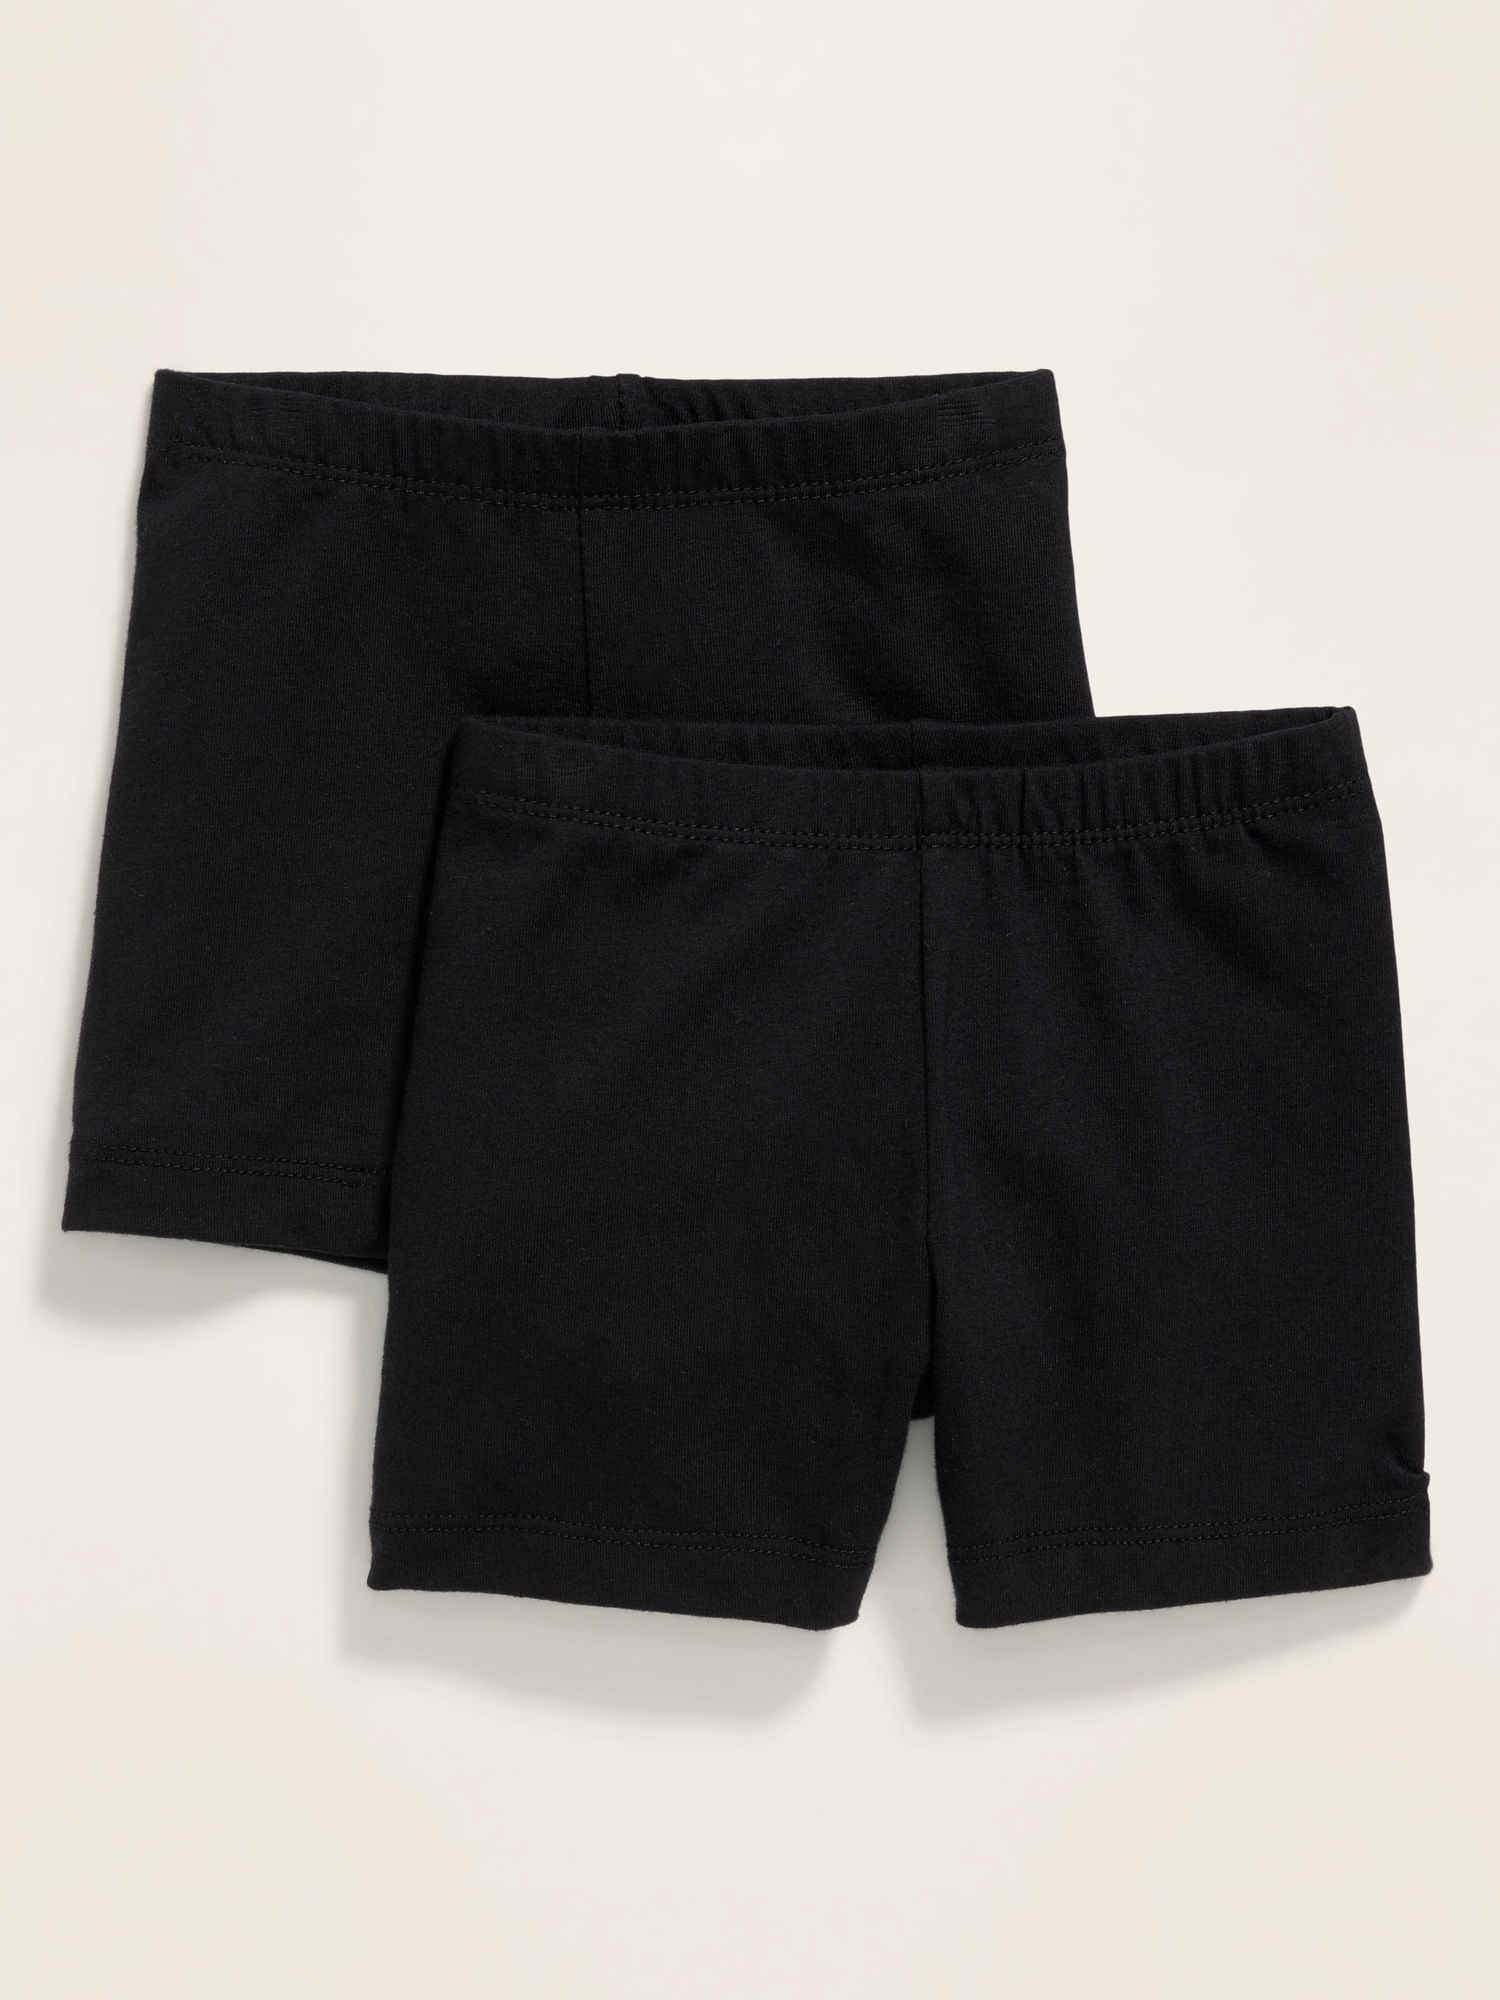 Old Navy 2-Pack Biker Shorts for Toddler Girls black. 1